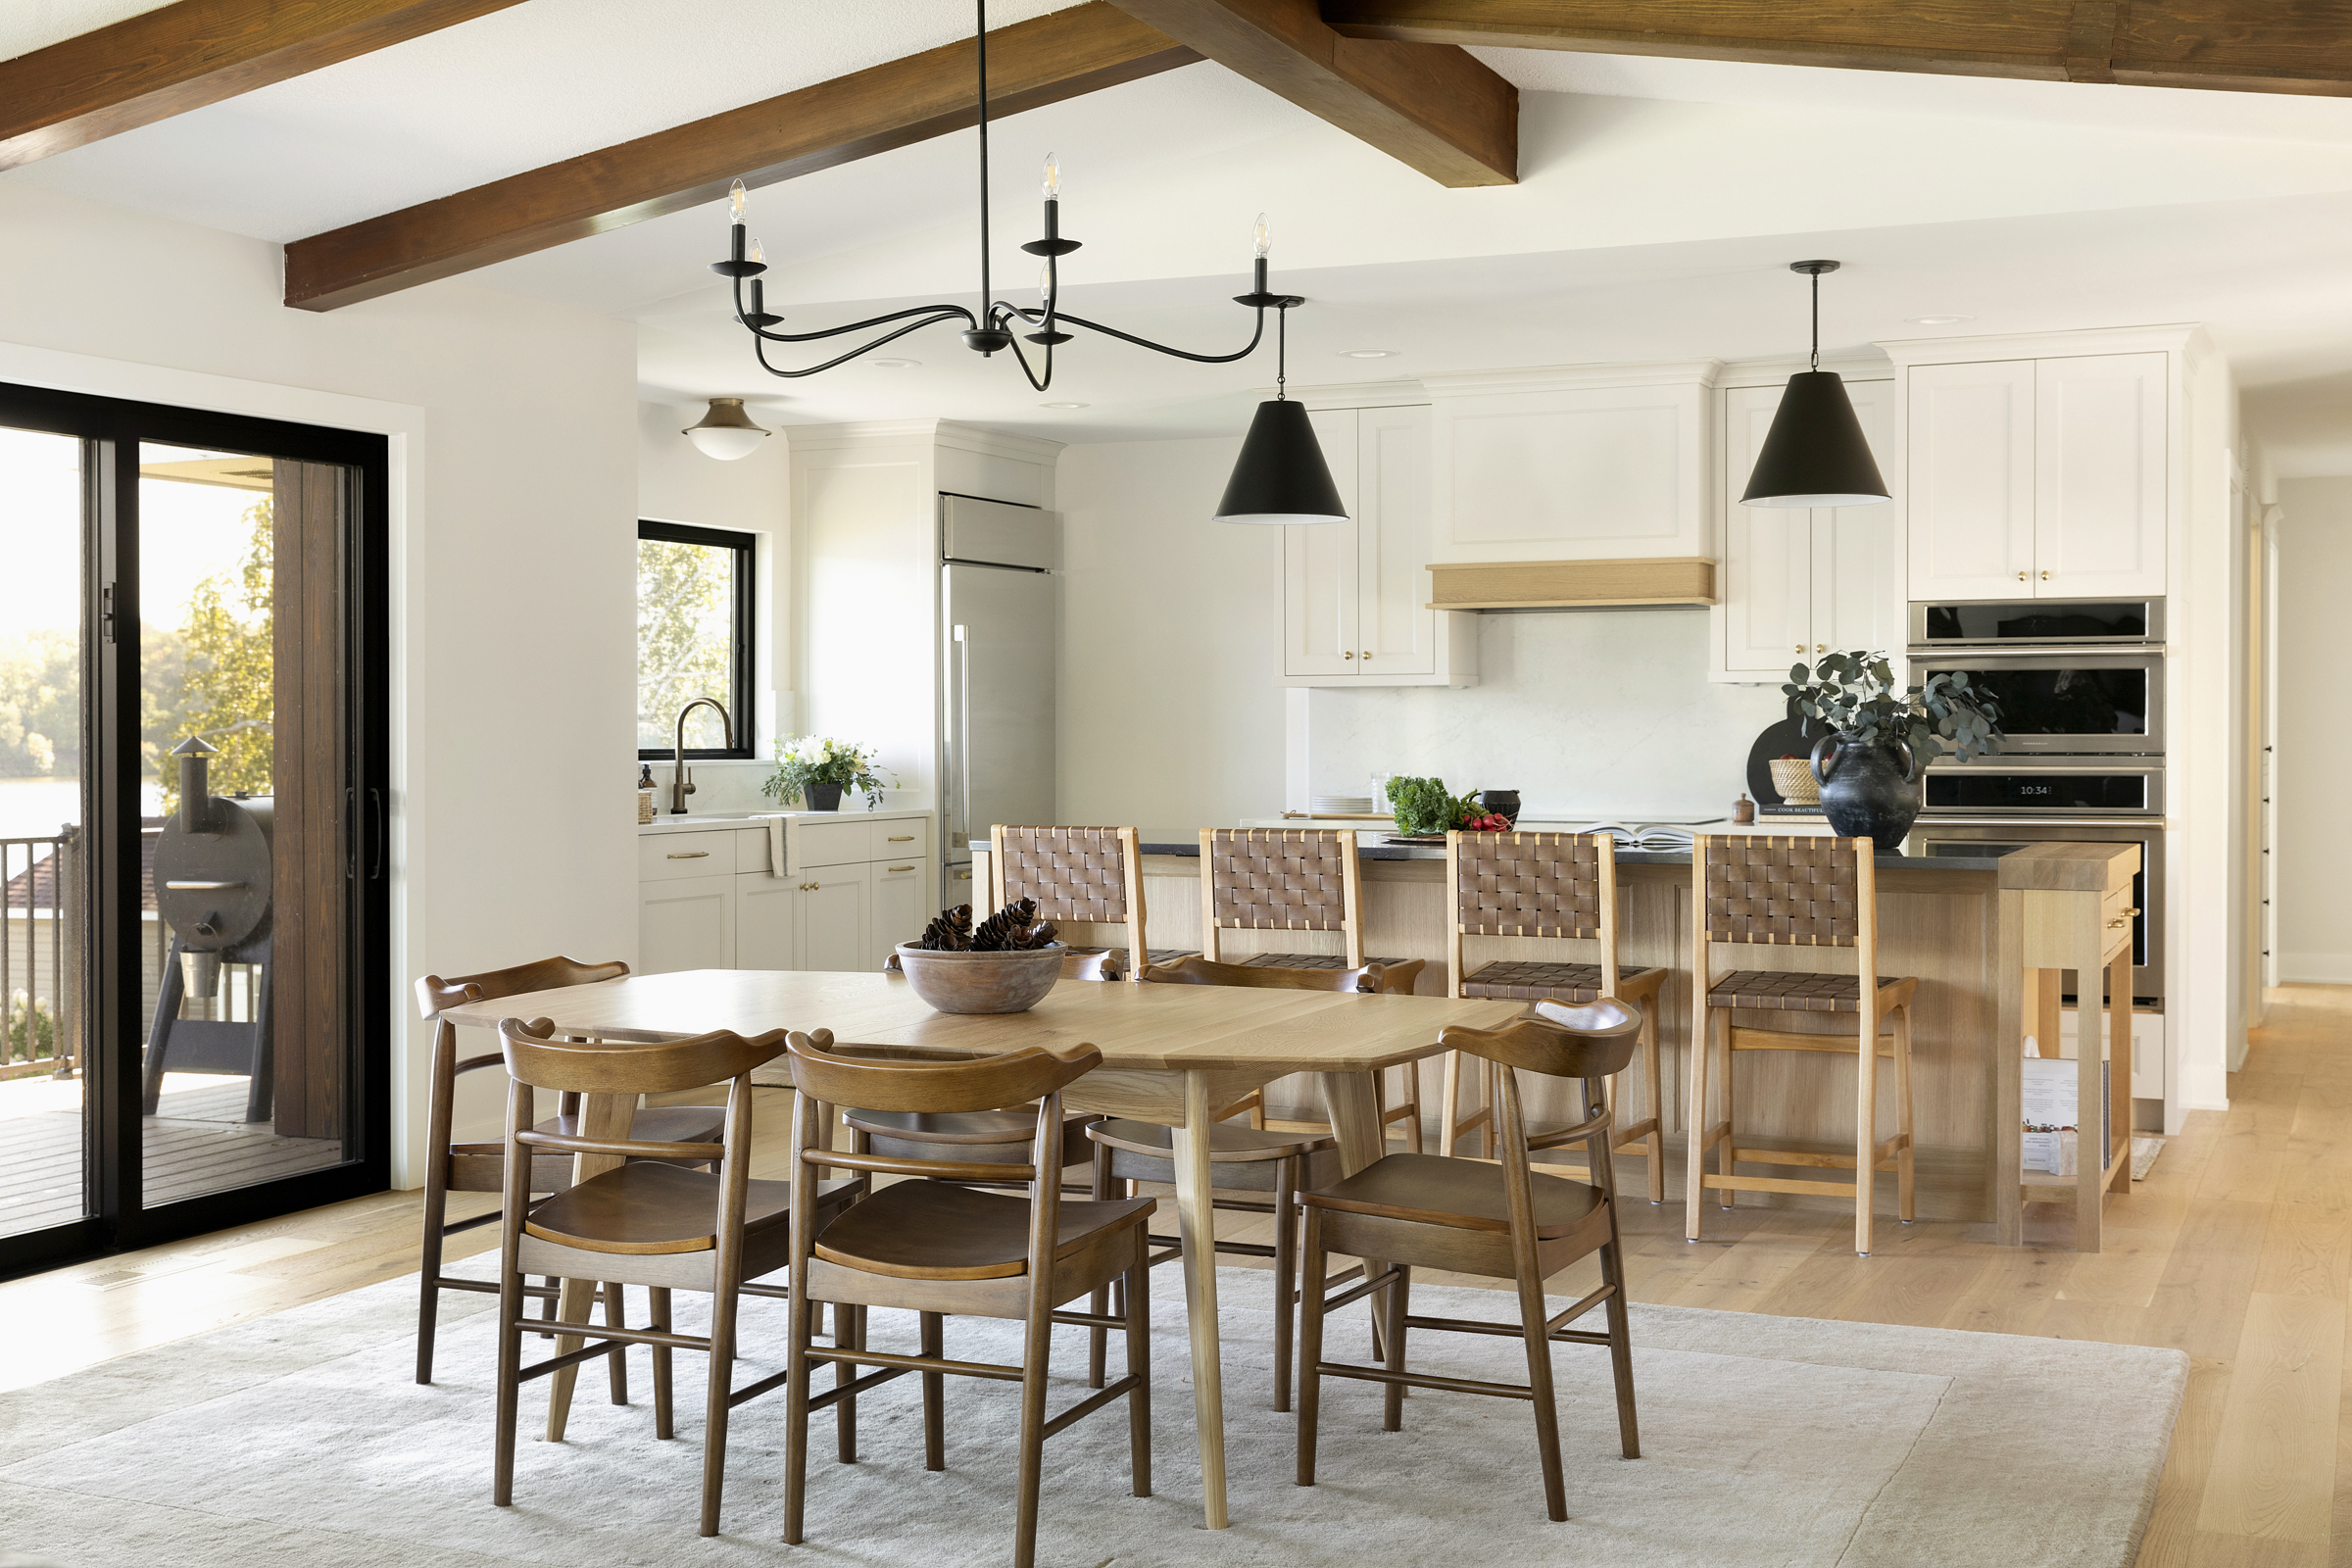 Open floorpan, neutral tone kitchen. Modern minimalism with clean lines.